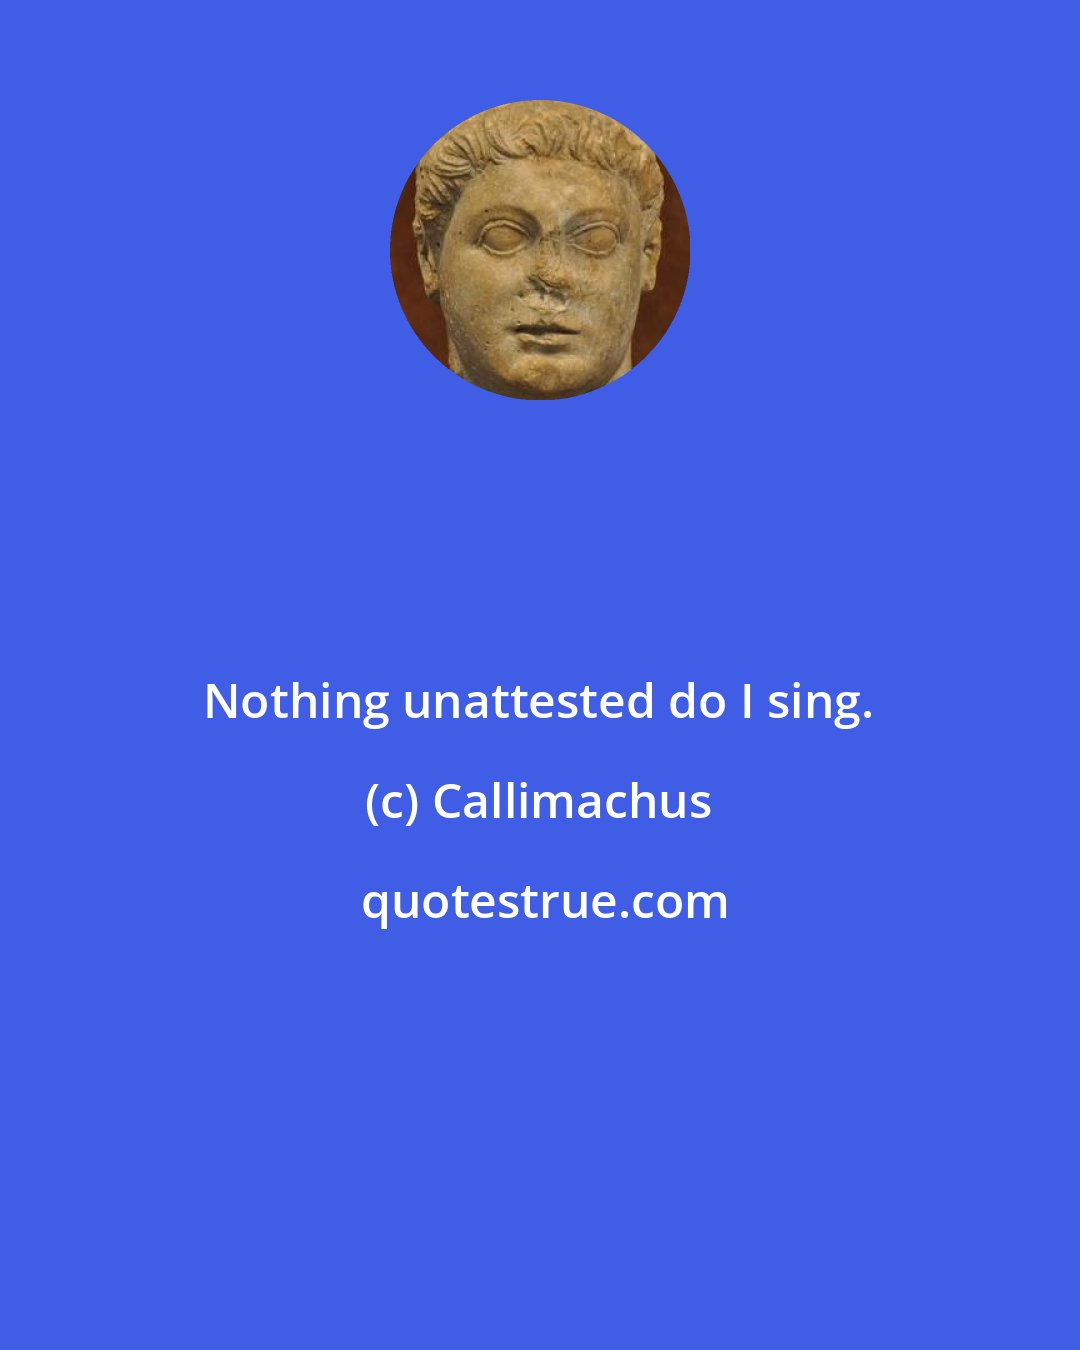 Callimachus: Nothing unattested do I sing.